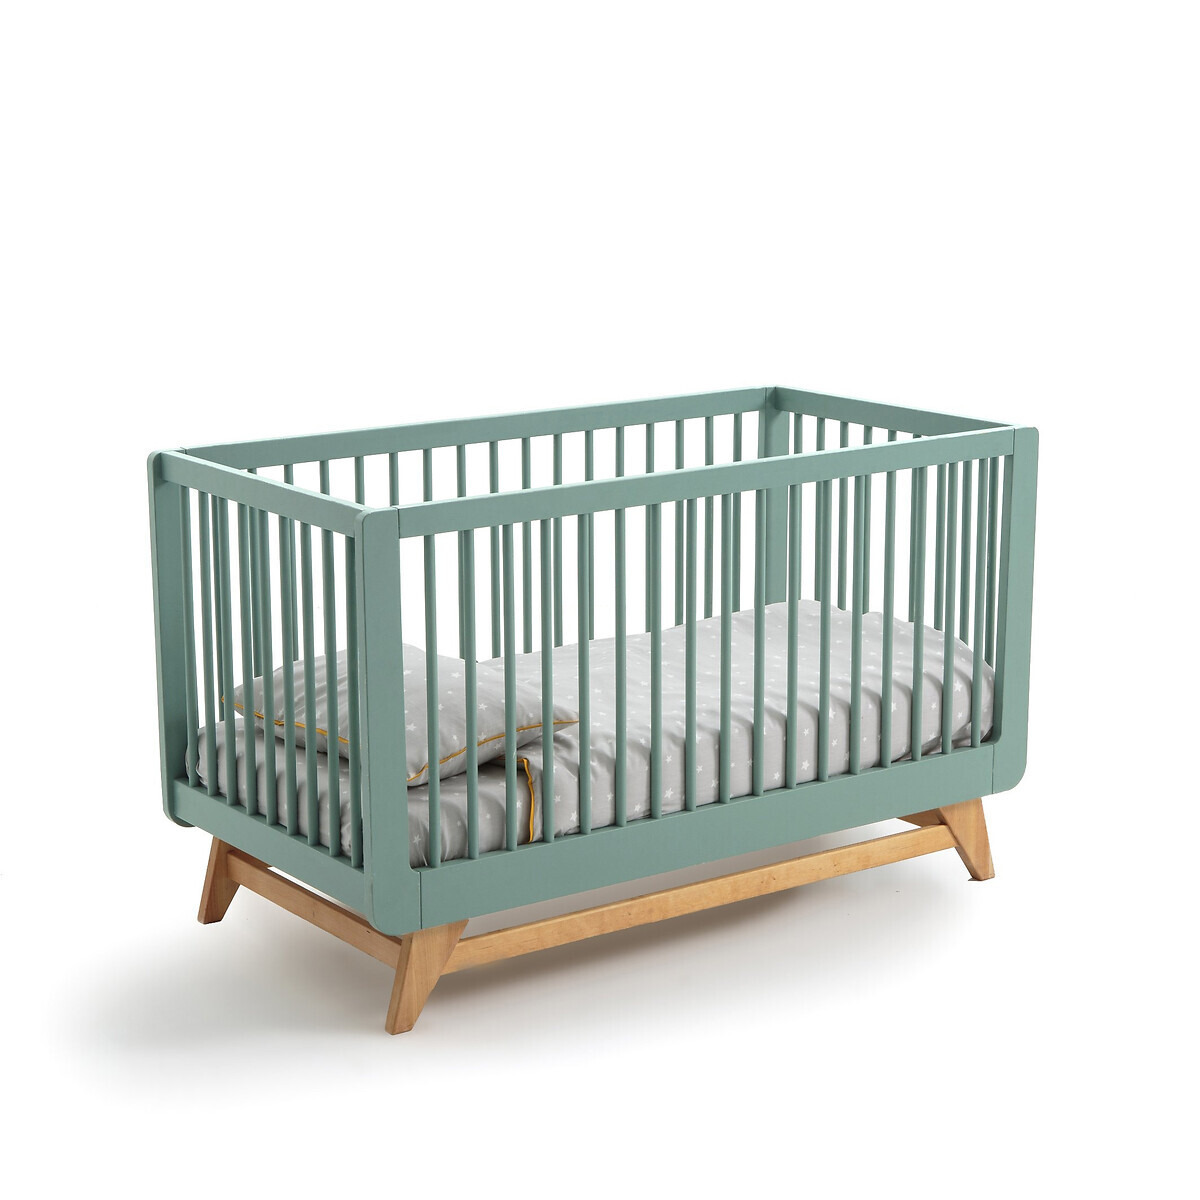 Willox Birch Adjustable Cot Bed - image 1